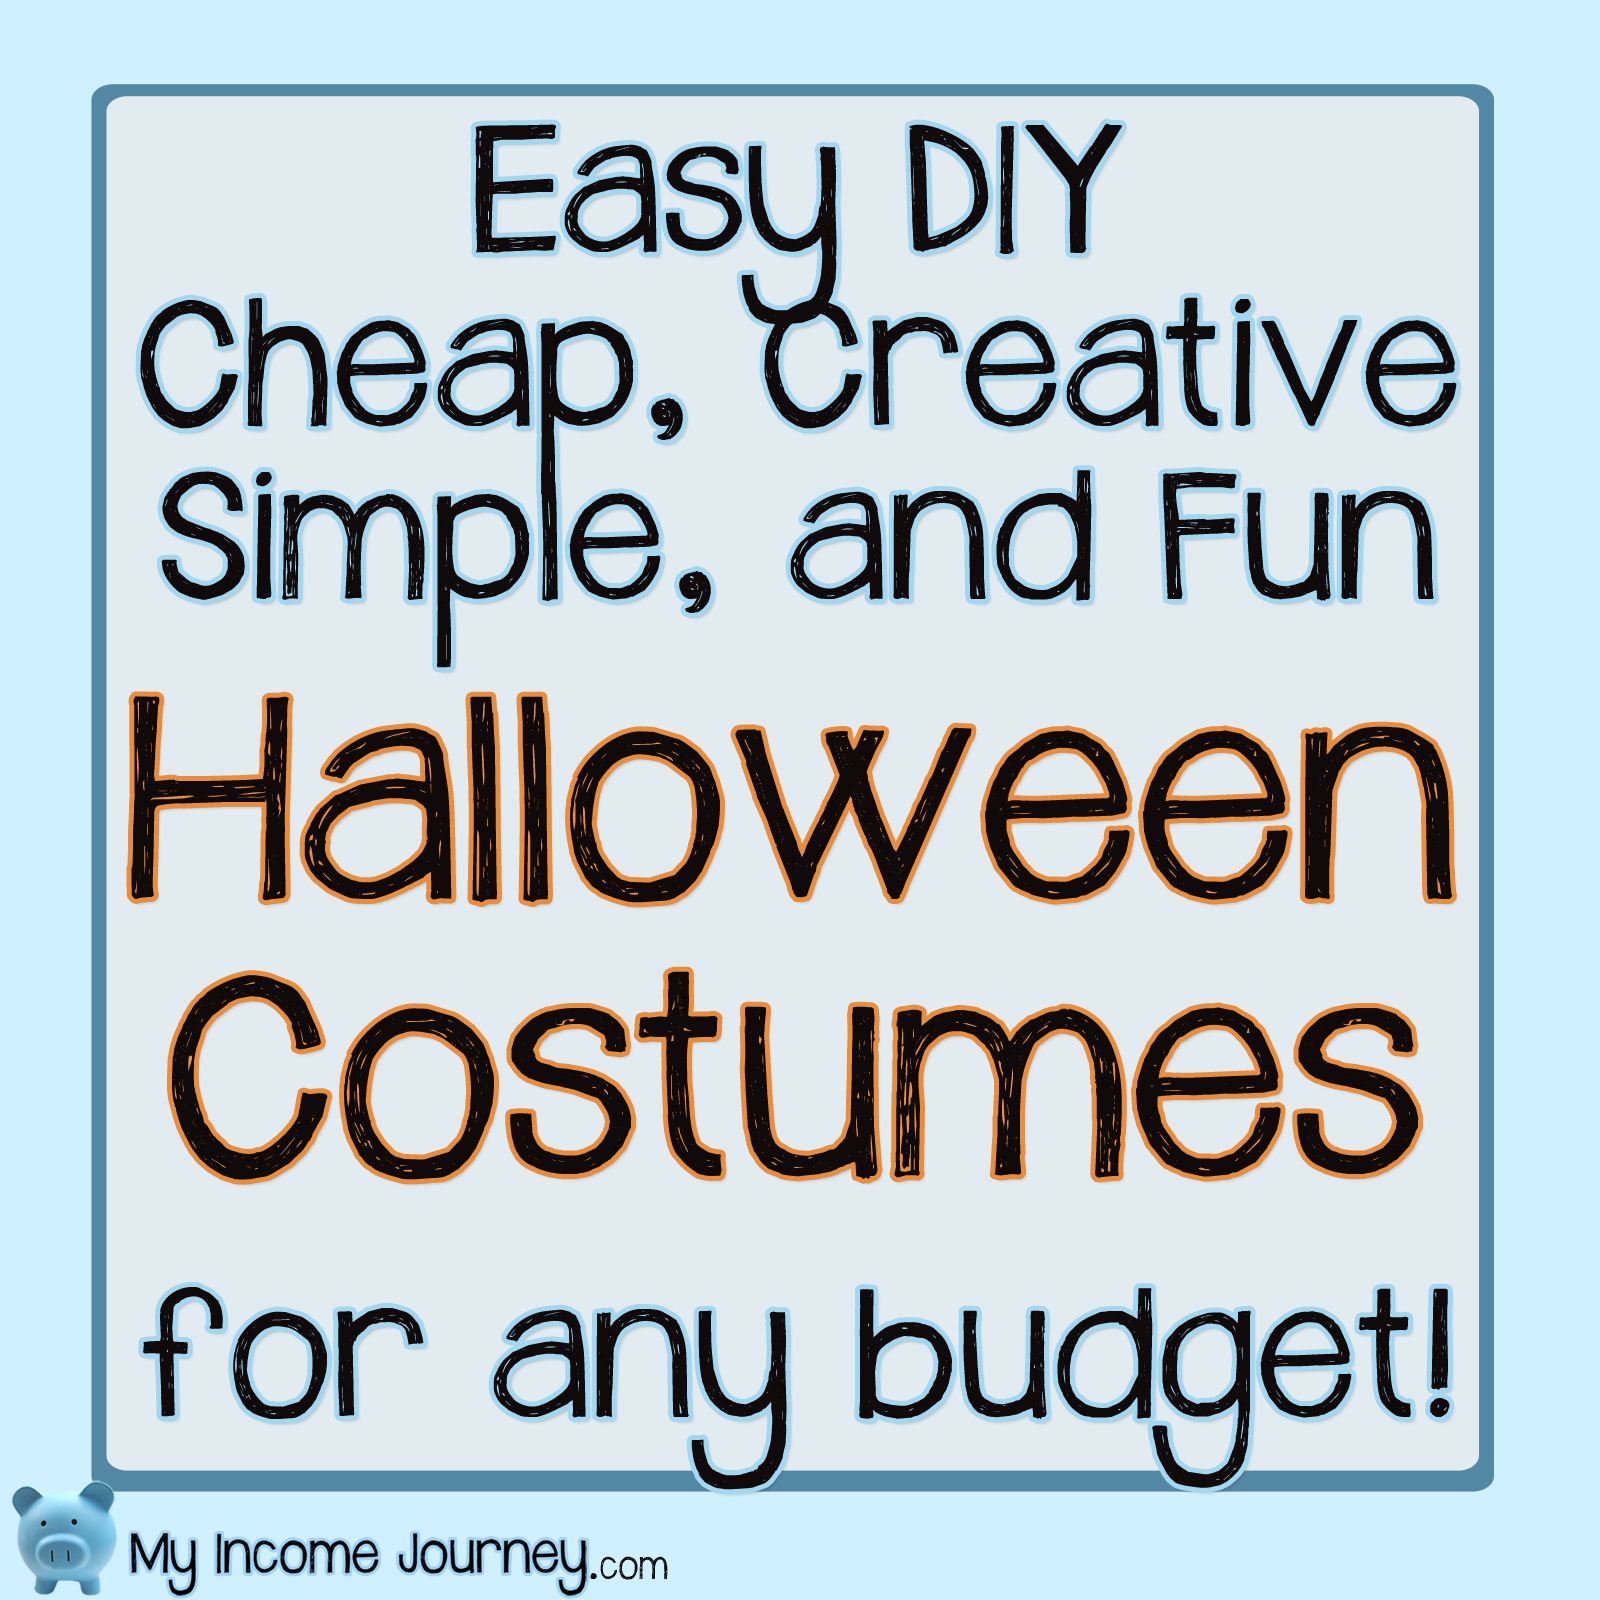 Halloween Costumes Budget